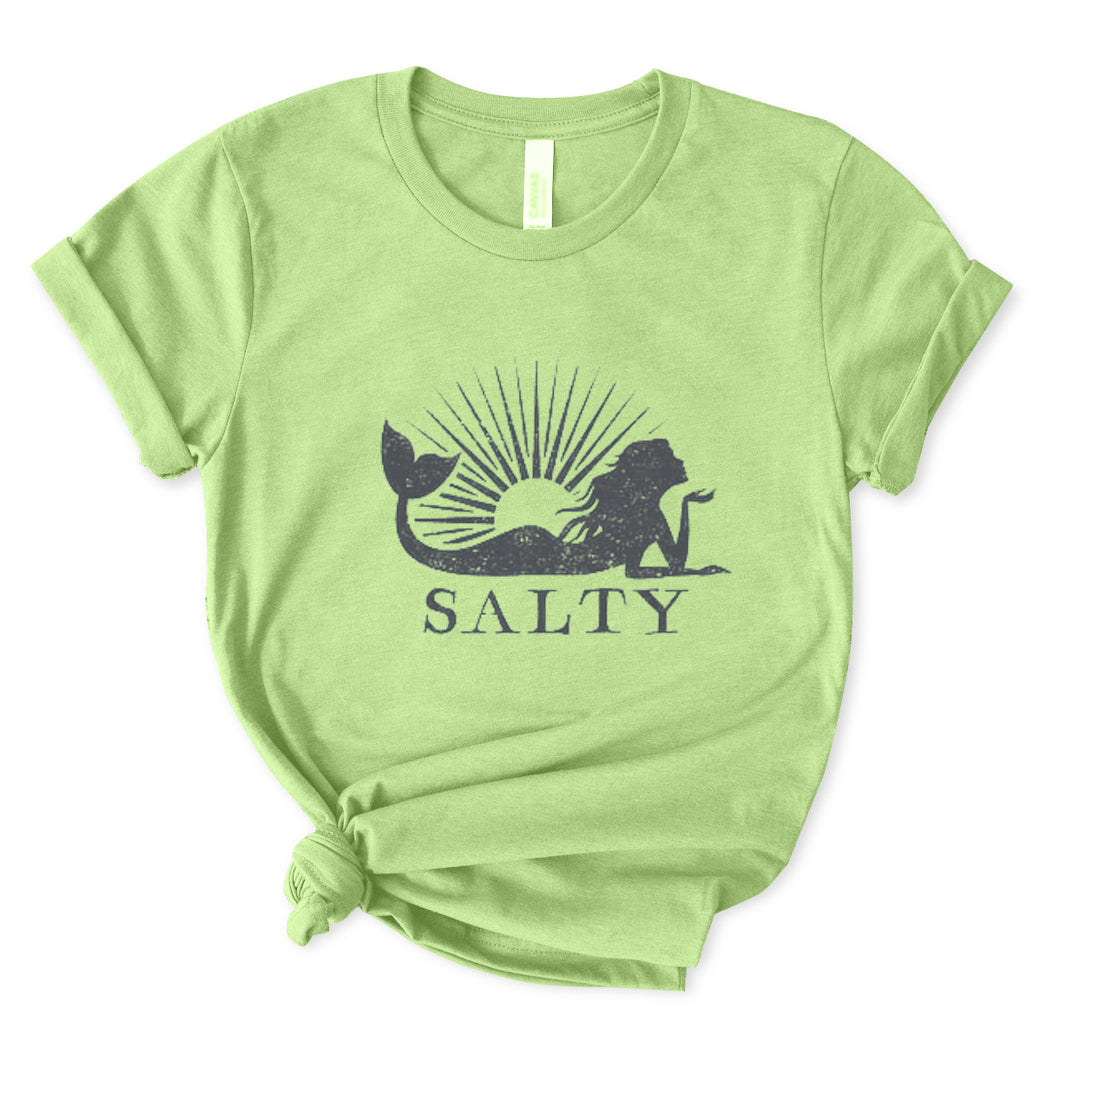 Salty Mermaid T-Shirt for Women